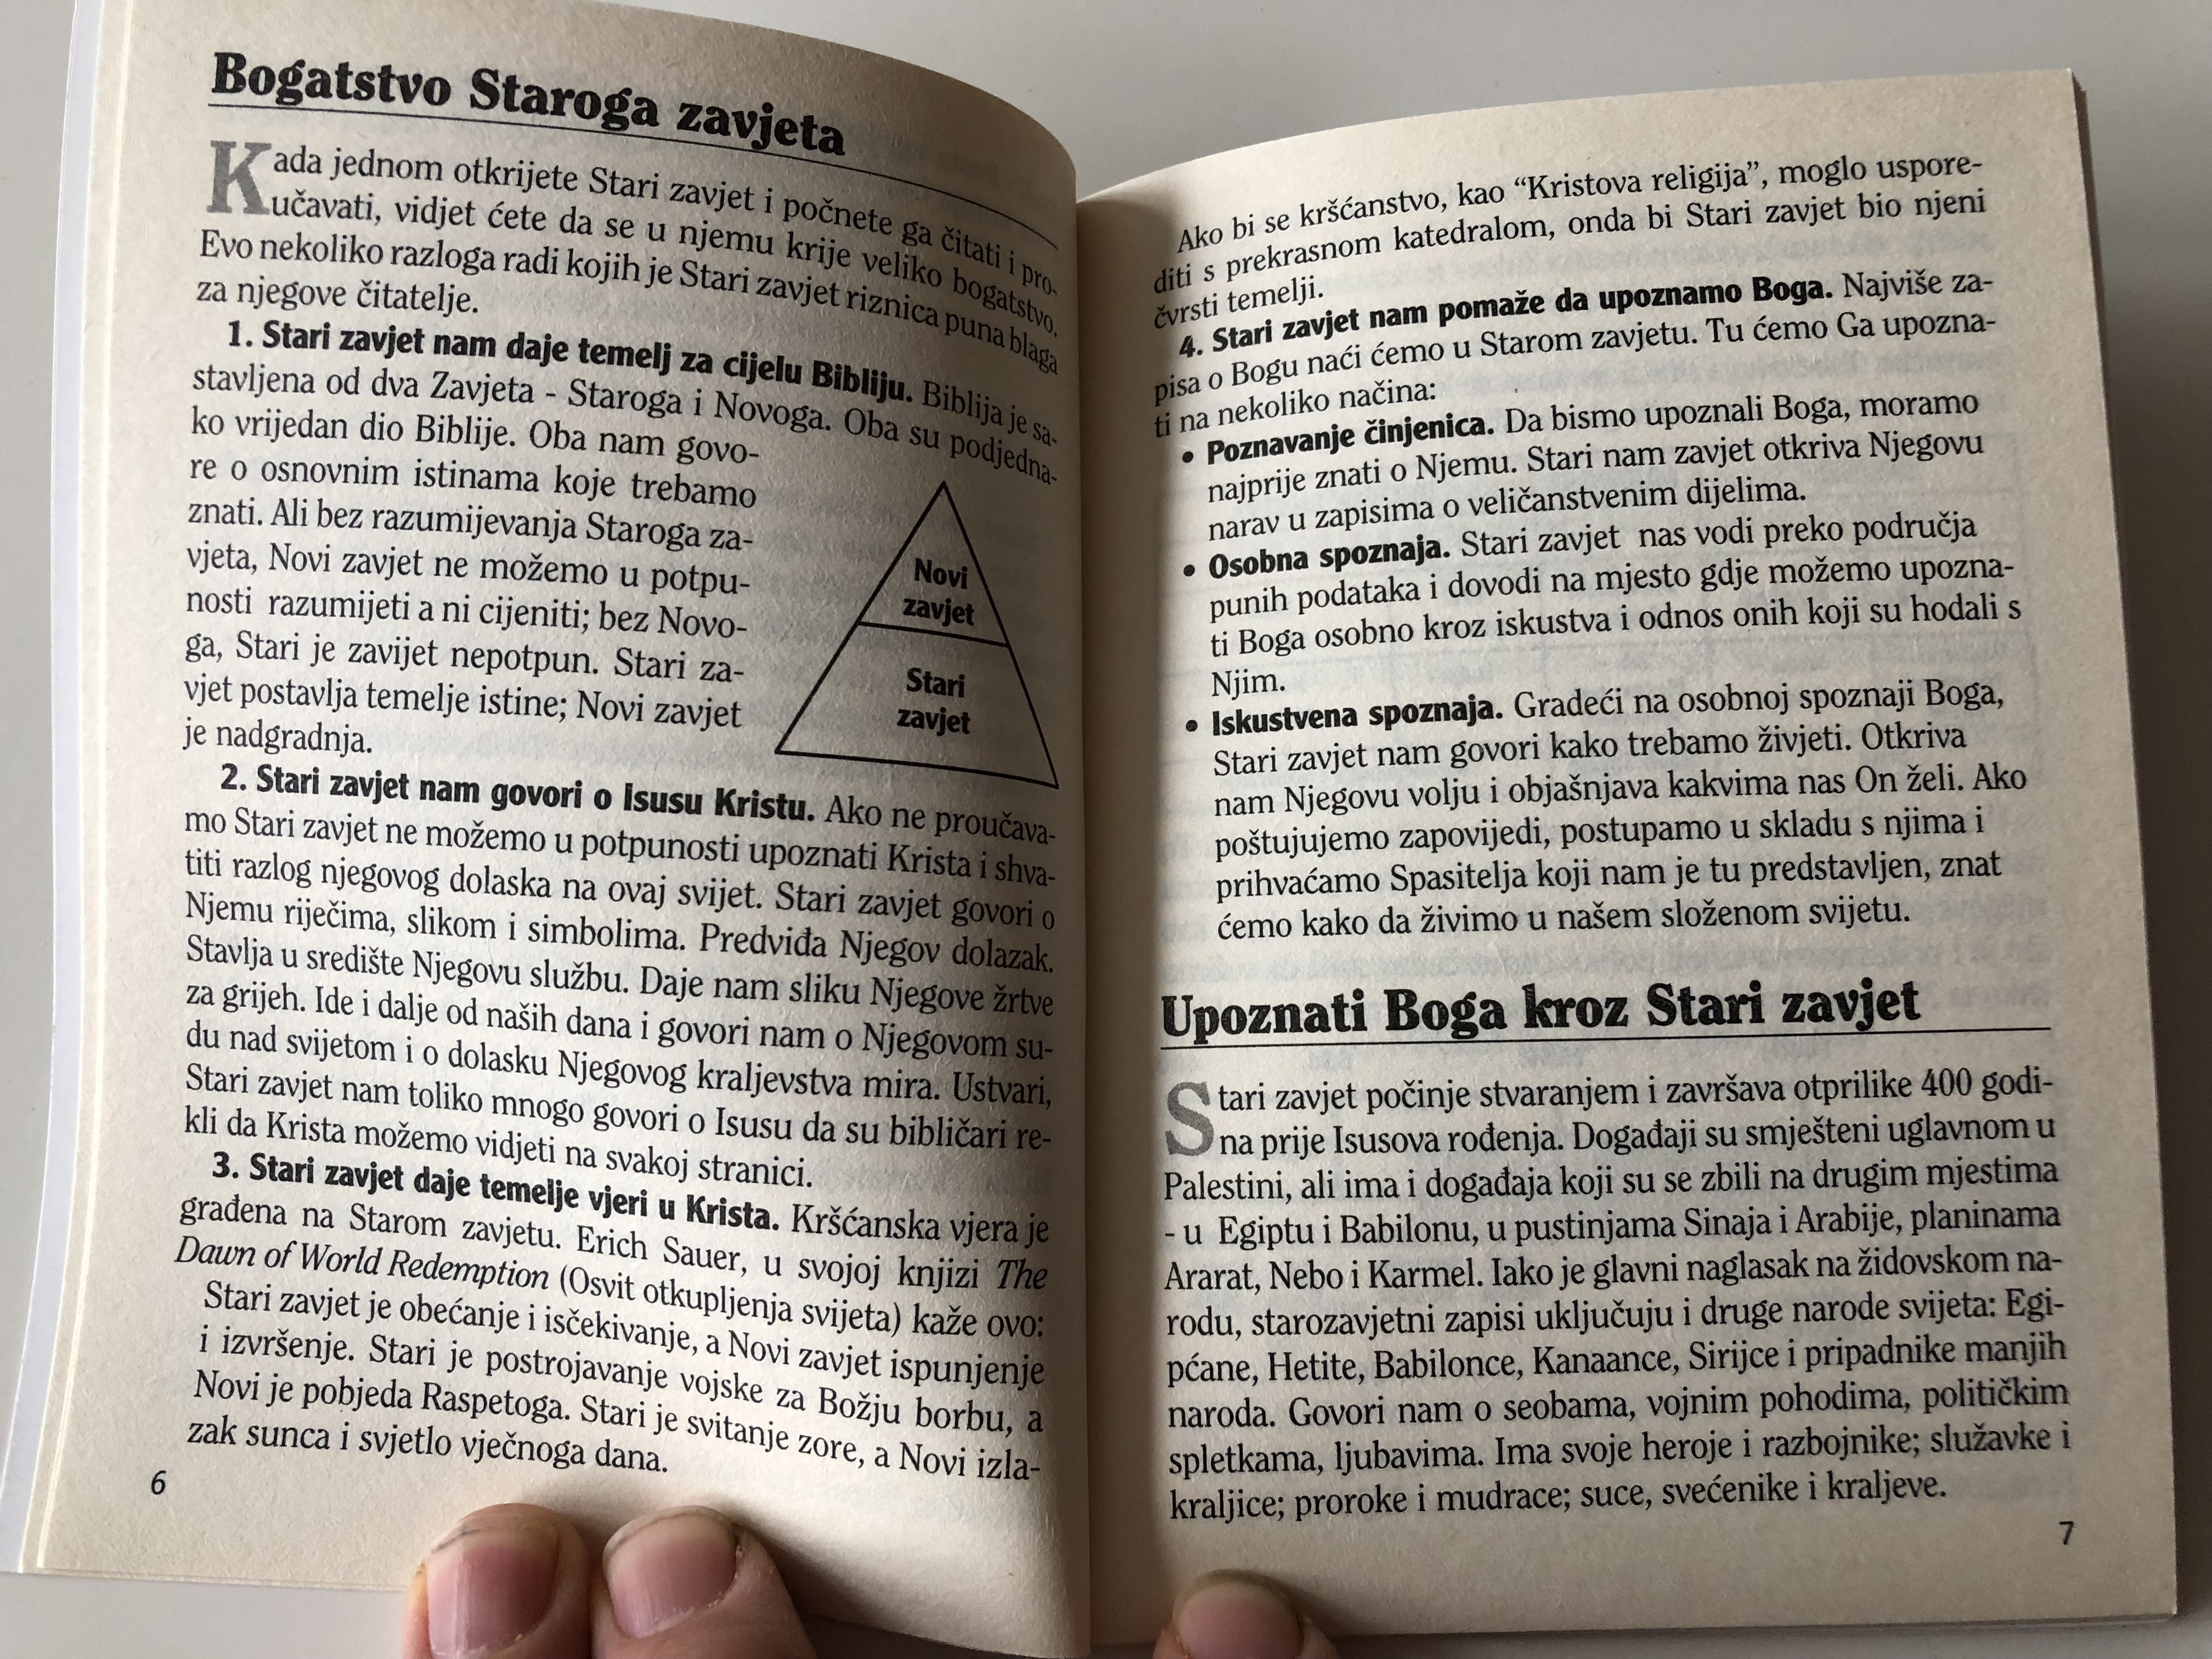 upoznati-boga-kroz-stari-zavjet-croatian-language-booklet-knowing-god-through-the-old-testament-david-egner-paperback-2004-3-.jpg